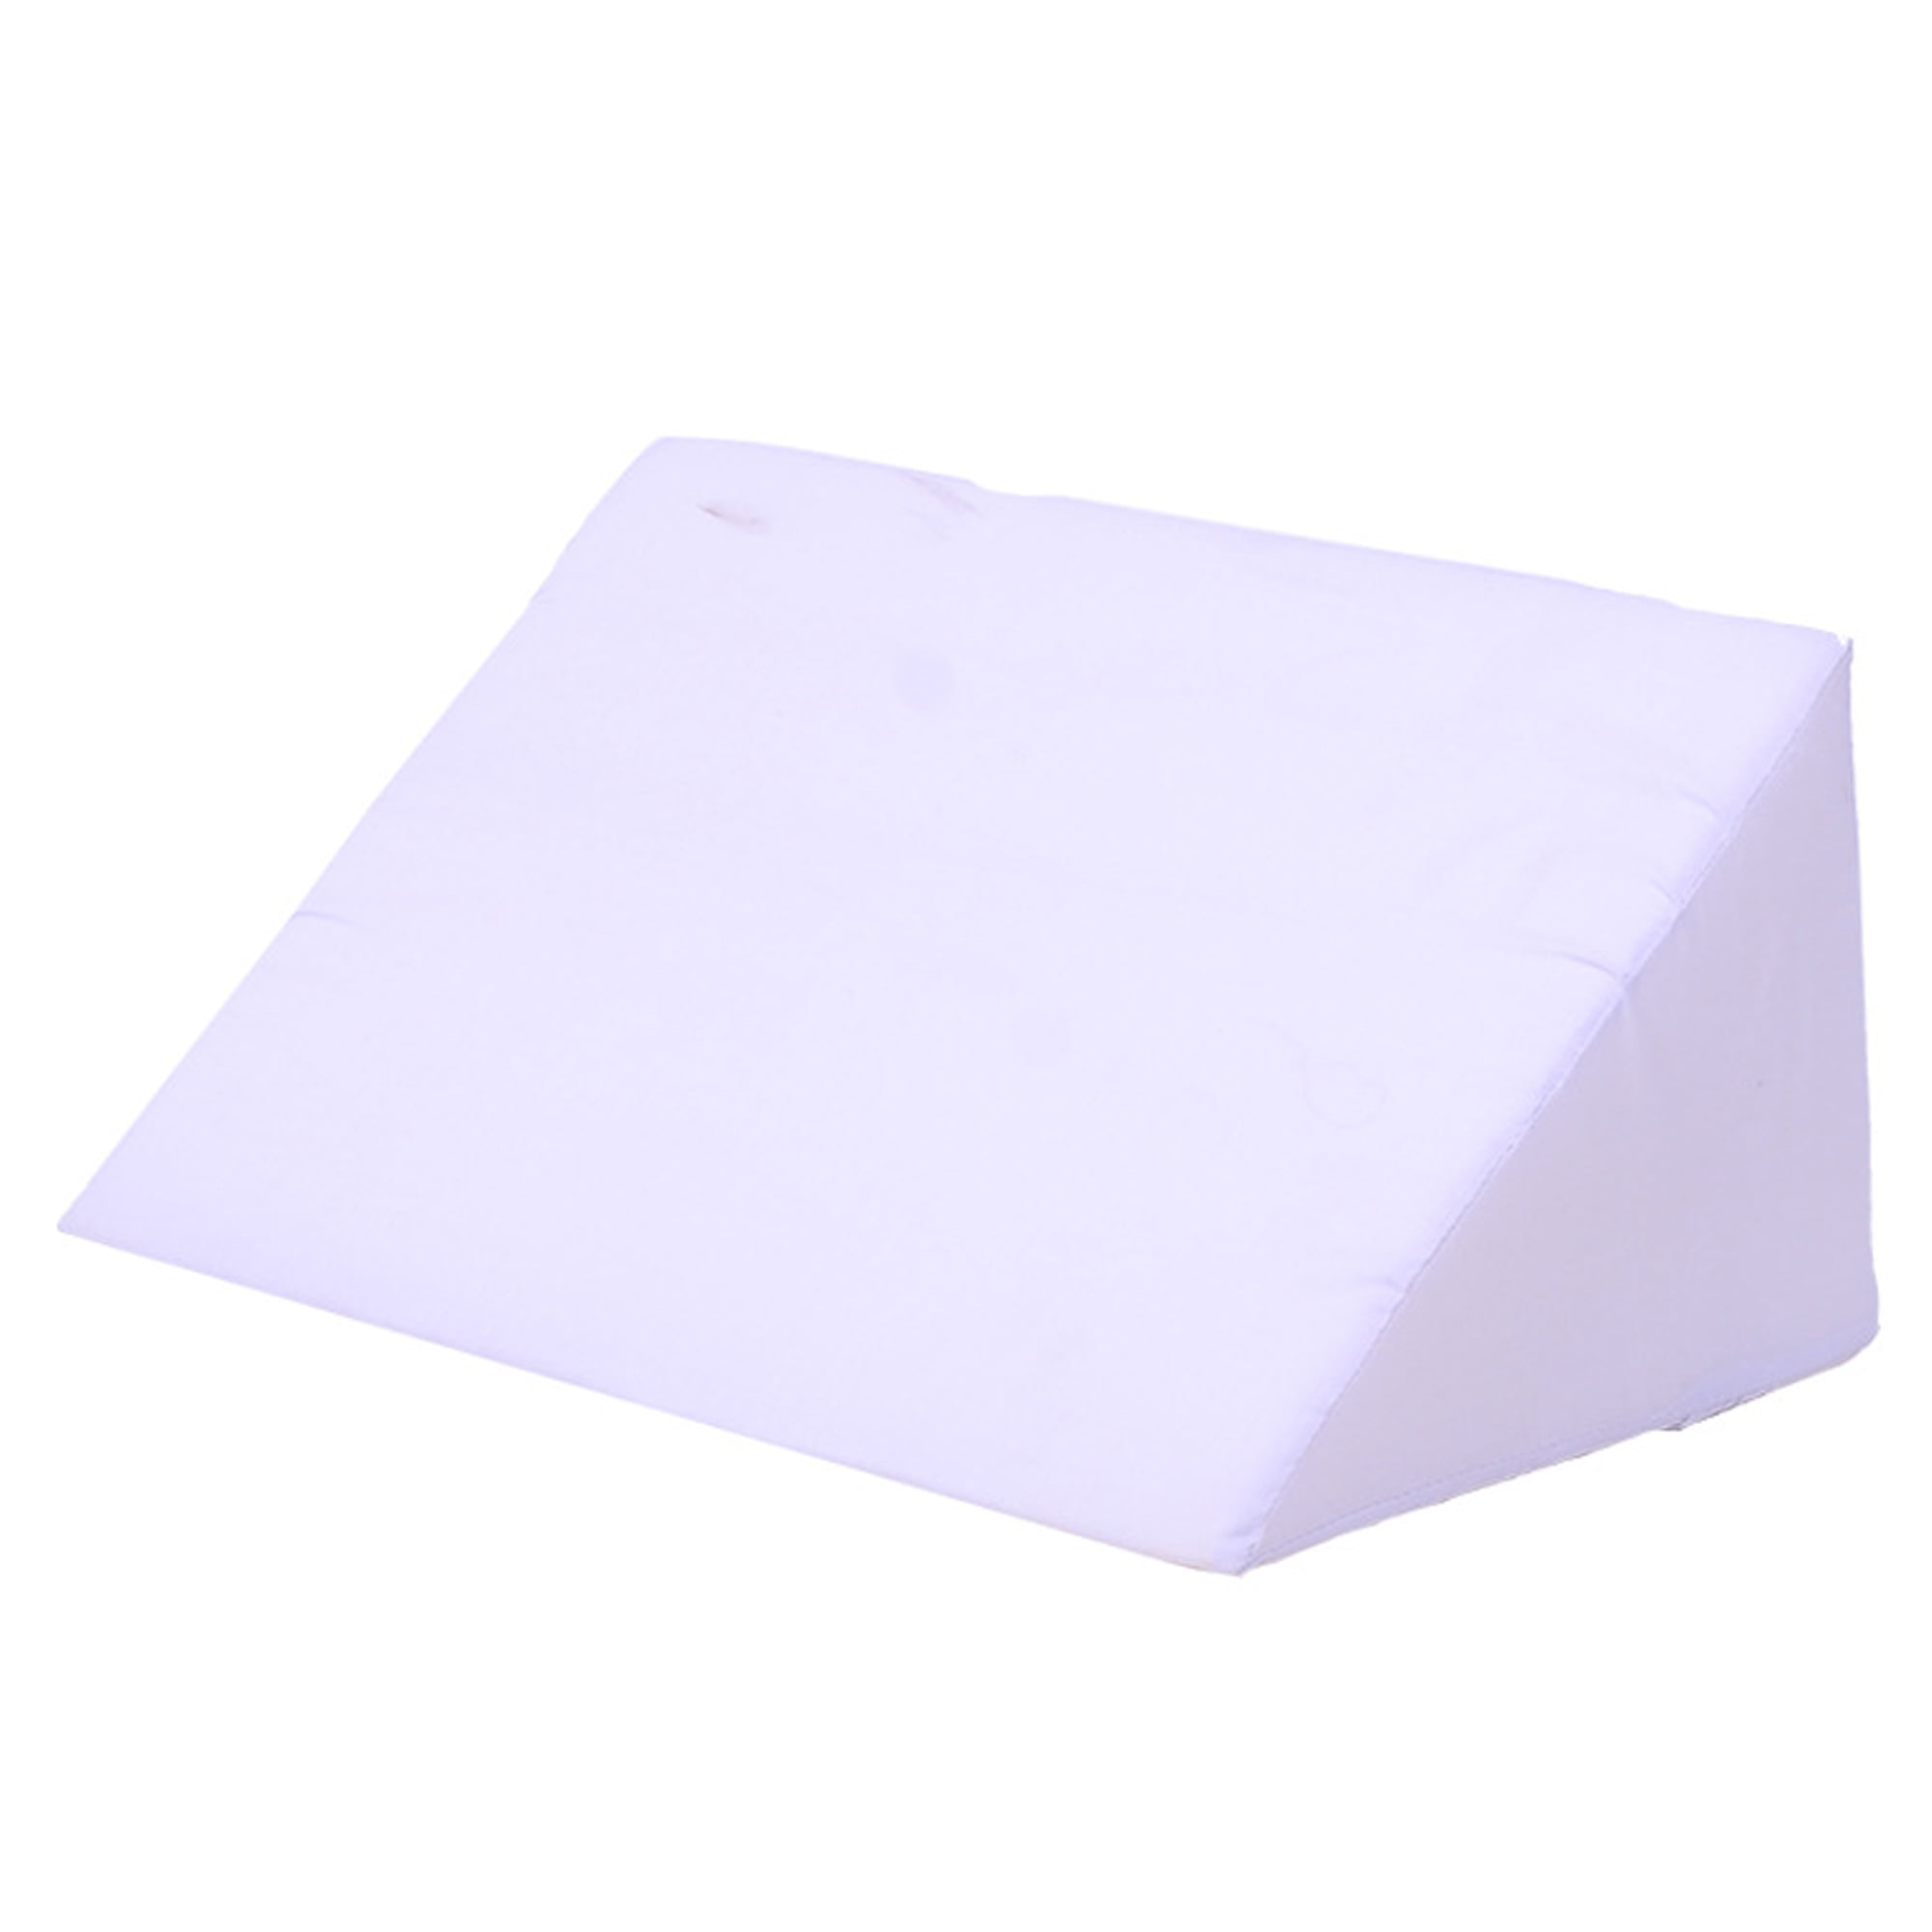 Acid Reflux Foam Bed Wedge Pillow Leg Elevation Back Lumbar Support Cushions 